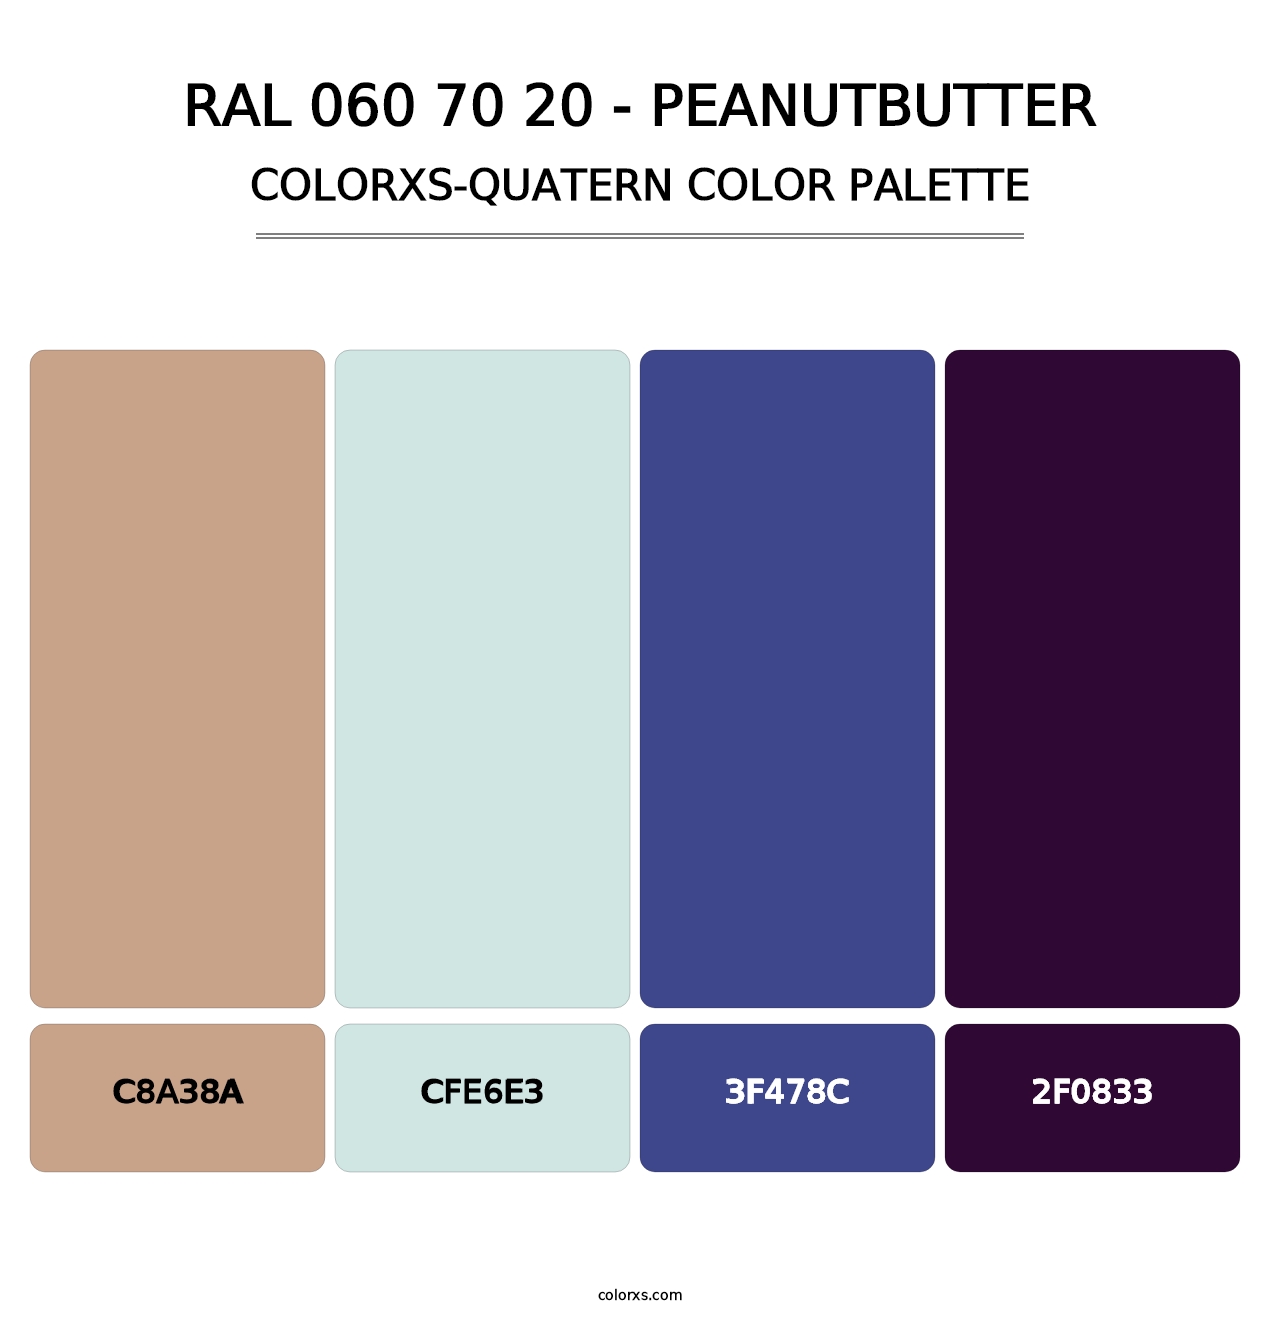 RAL 060 70 20 - Peanutbutter - Colorxs Quatern Palette